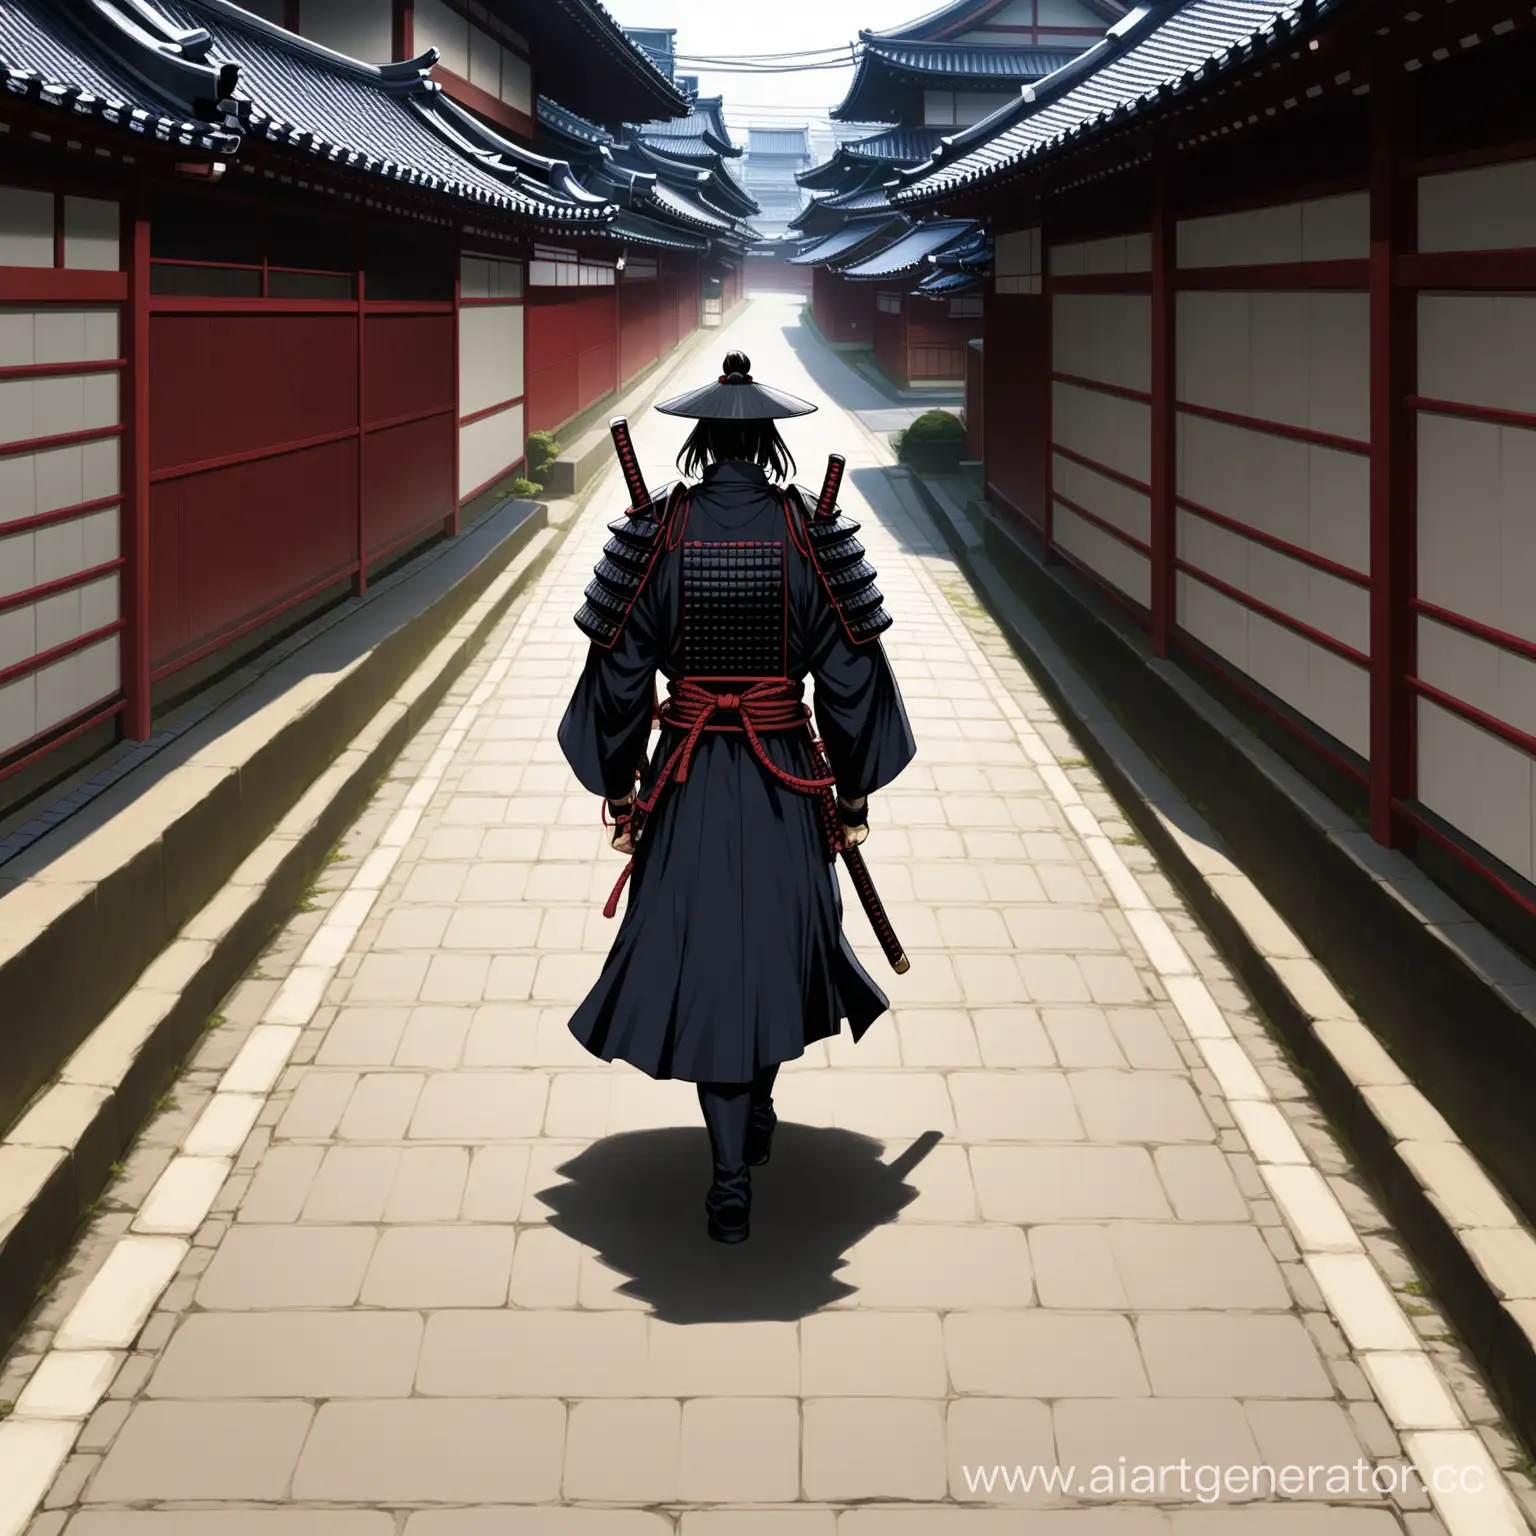 Samurai-Strolling-Through-Cherry-Blossomlined-Paths-in-Tokyo